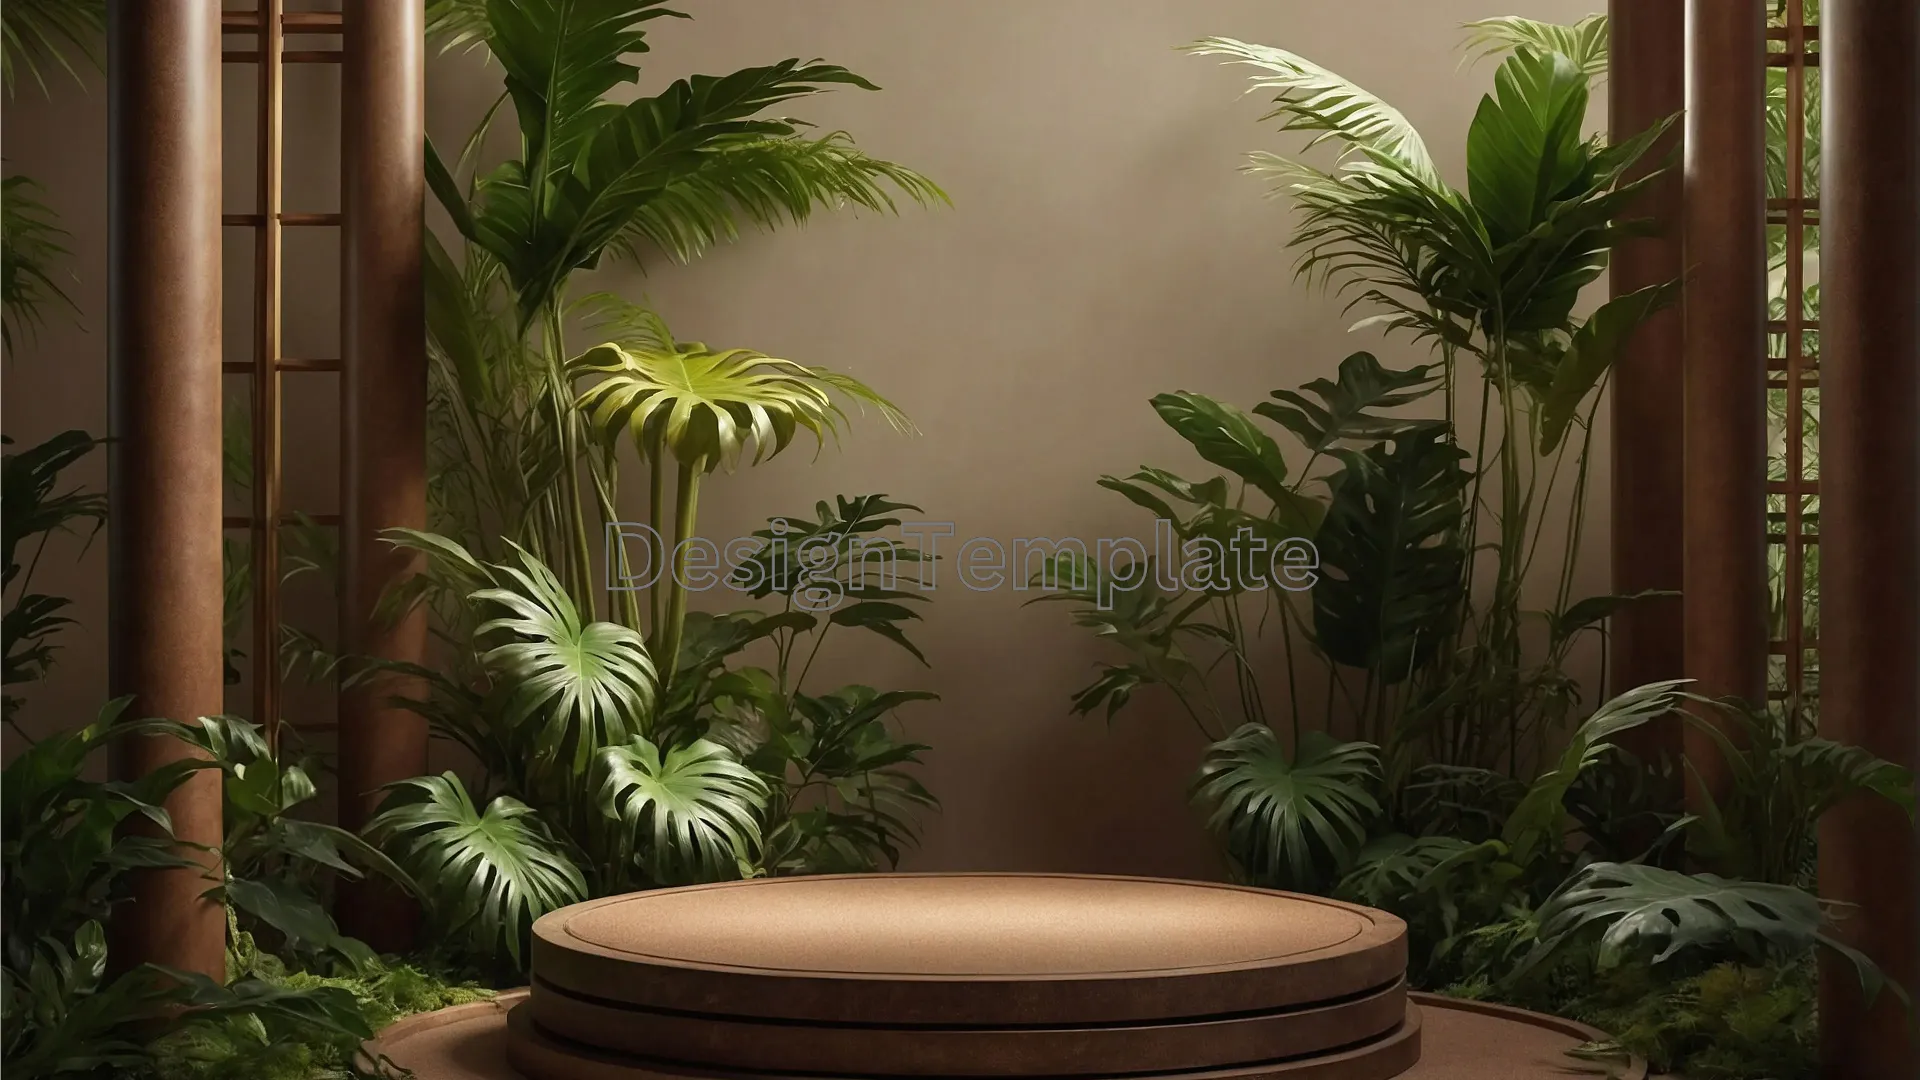 Eco-Chic Circular Platform Tropical Garden Image